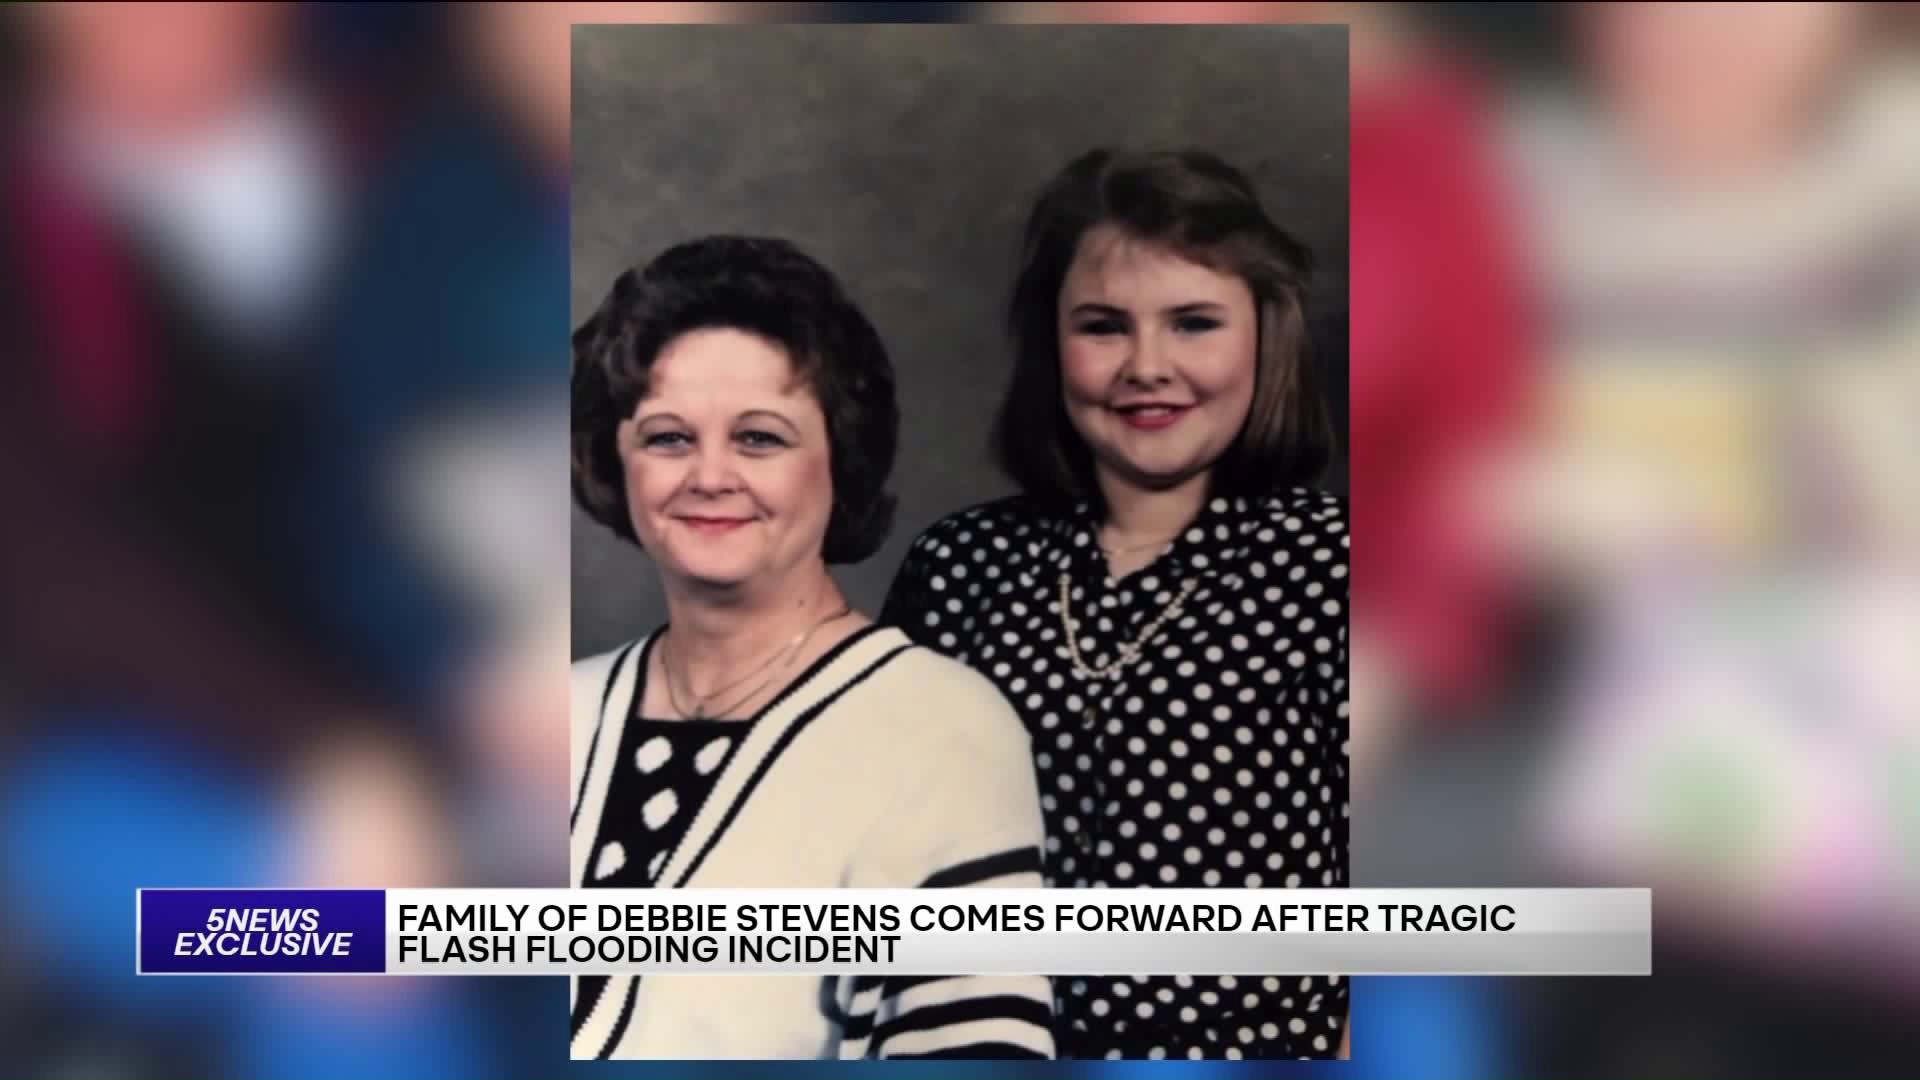 Family of Debbie Stevens Comes Forward After Tragic Death